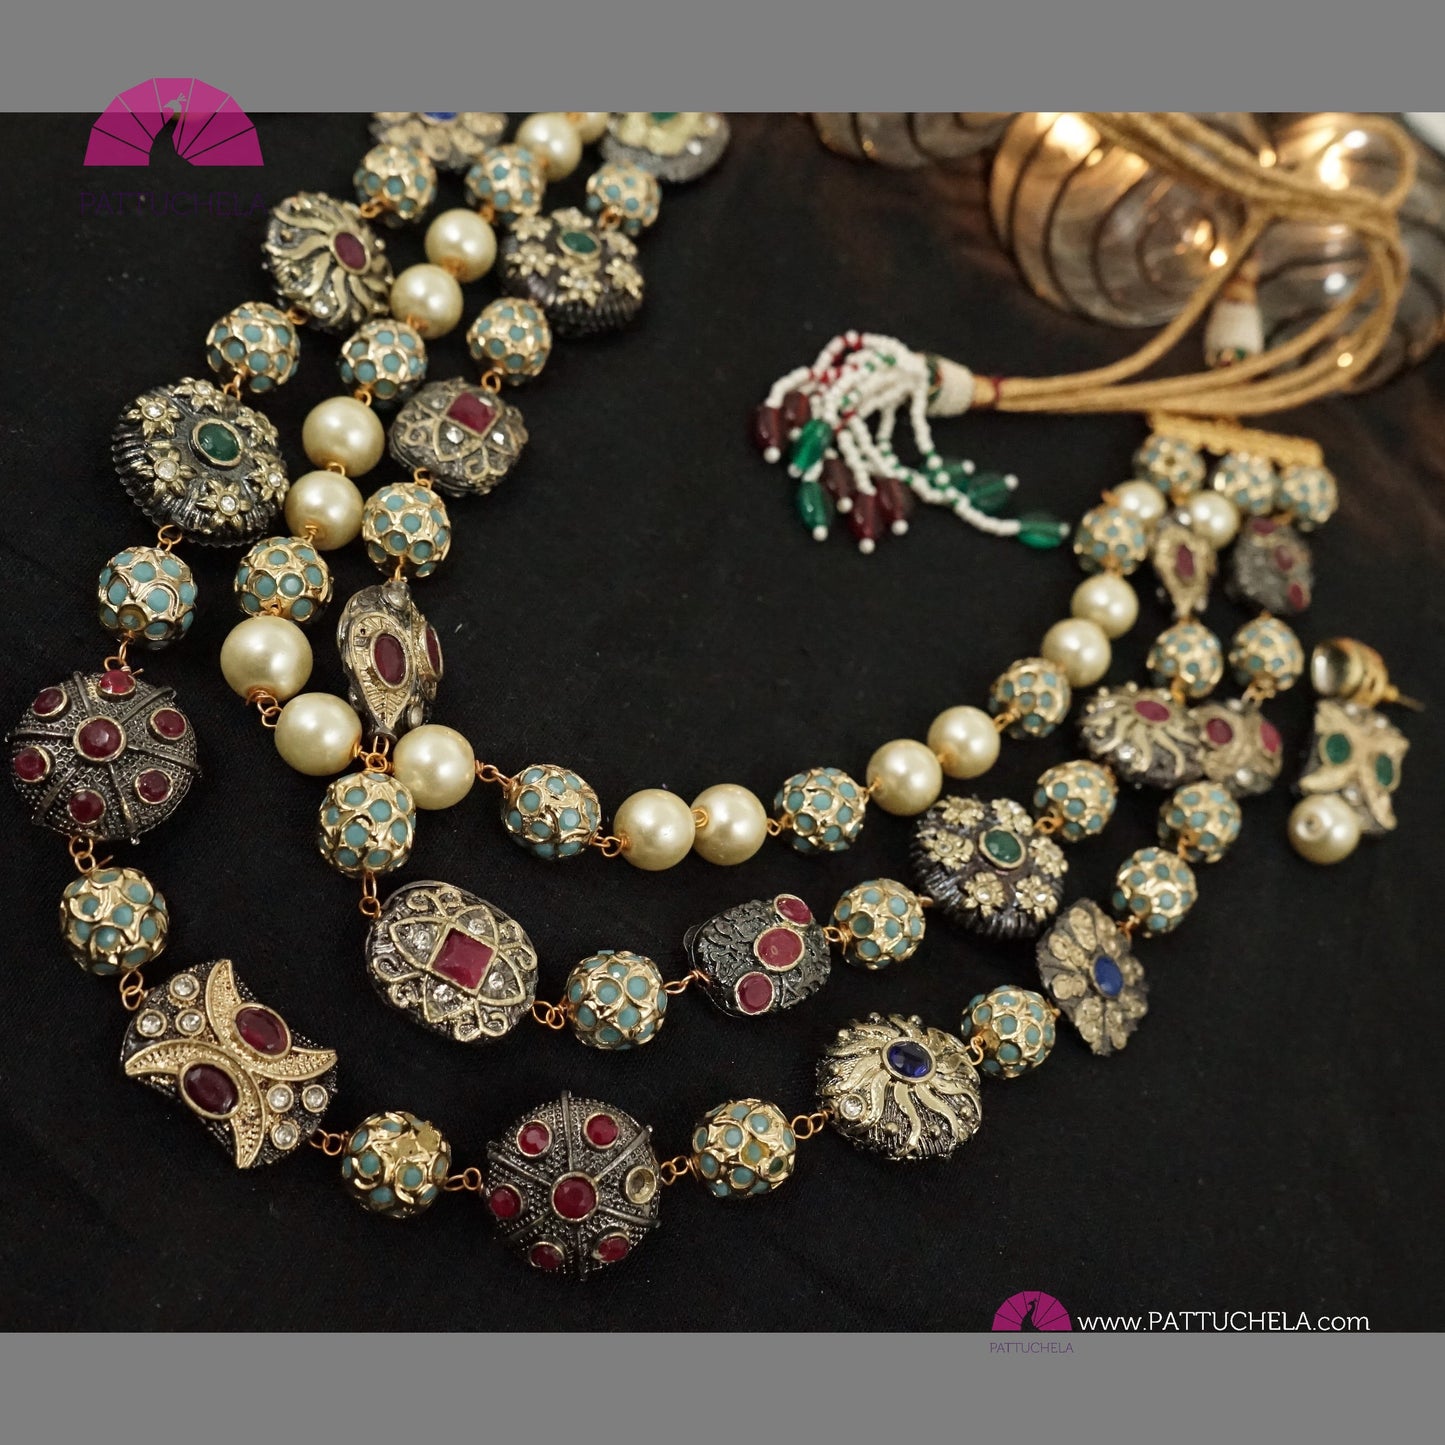 3 layer Beautiful Mughal Jadau Beads & Stone Long Necklace set with ear rings